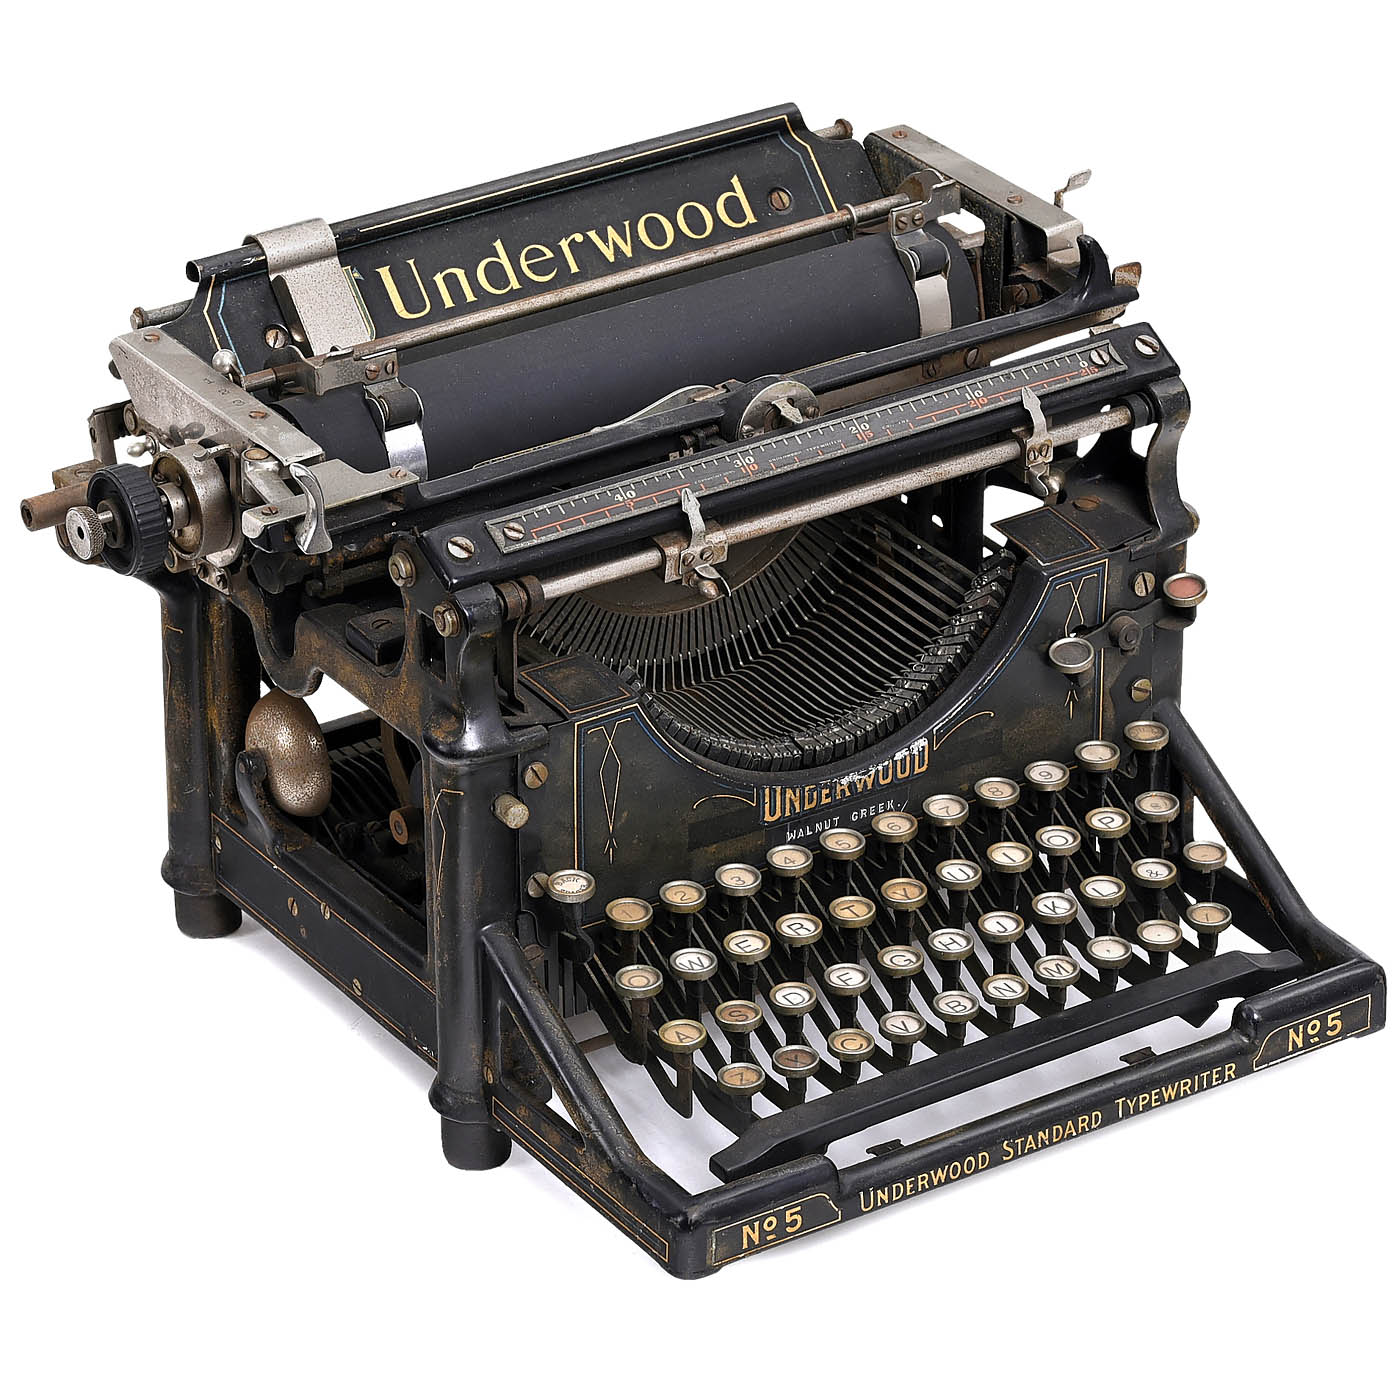 4 American Typewriters - Image 2 of 5